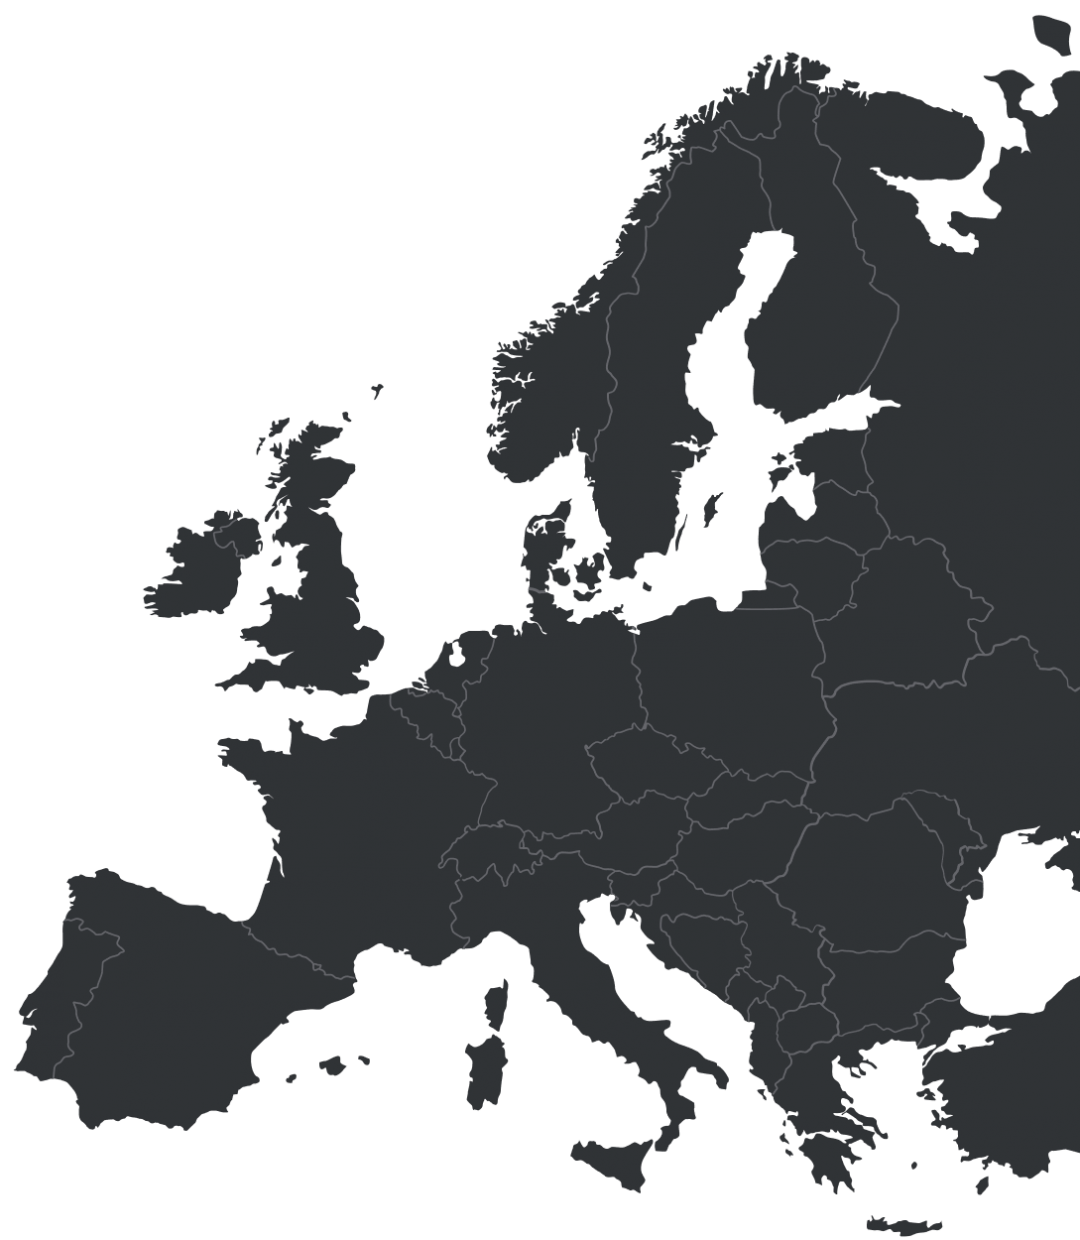 Europe map hotspots - Export